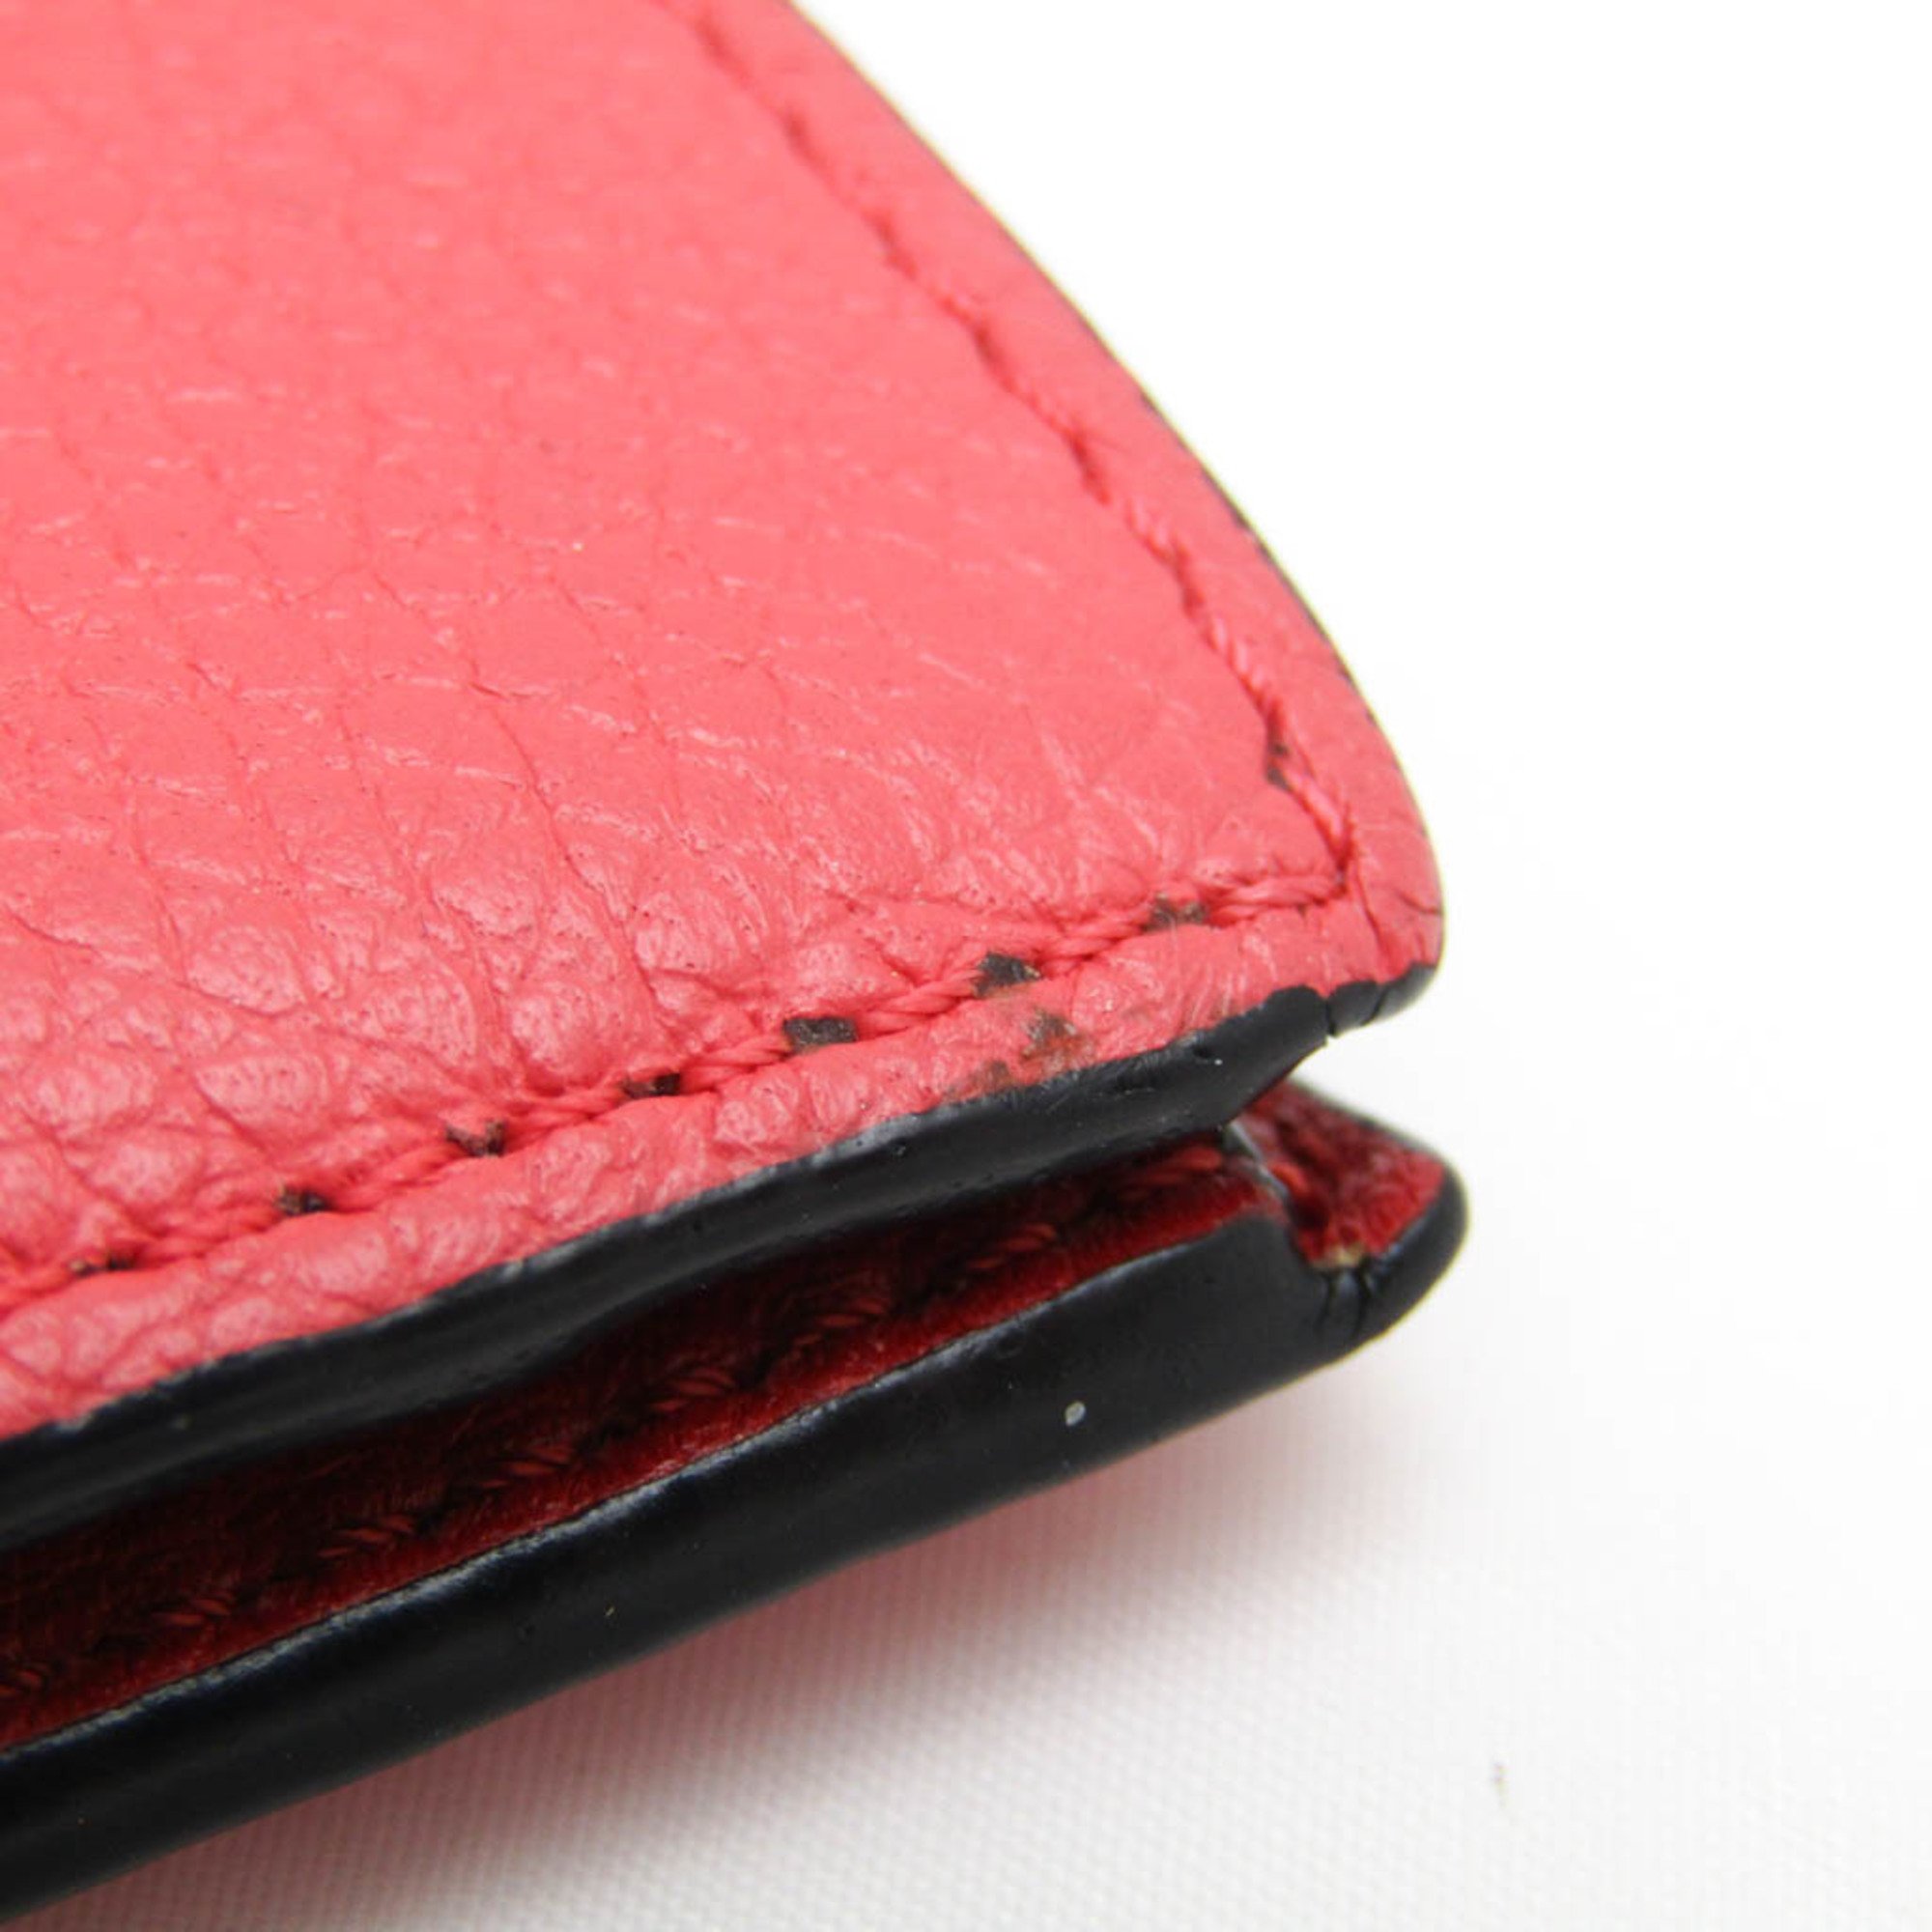 Loewe Vertical Wallet Medium Women's Leather Middle Wallet (bi-fold) Bordeaux,Pink,Red Color